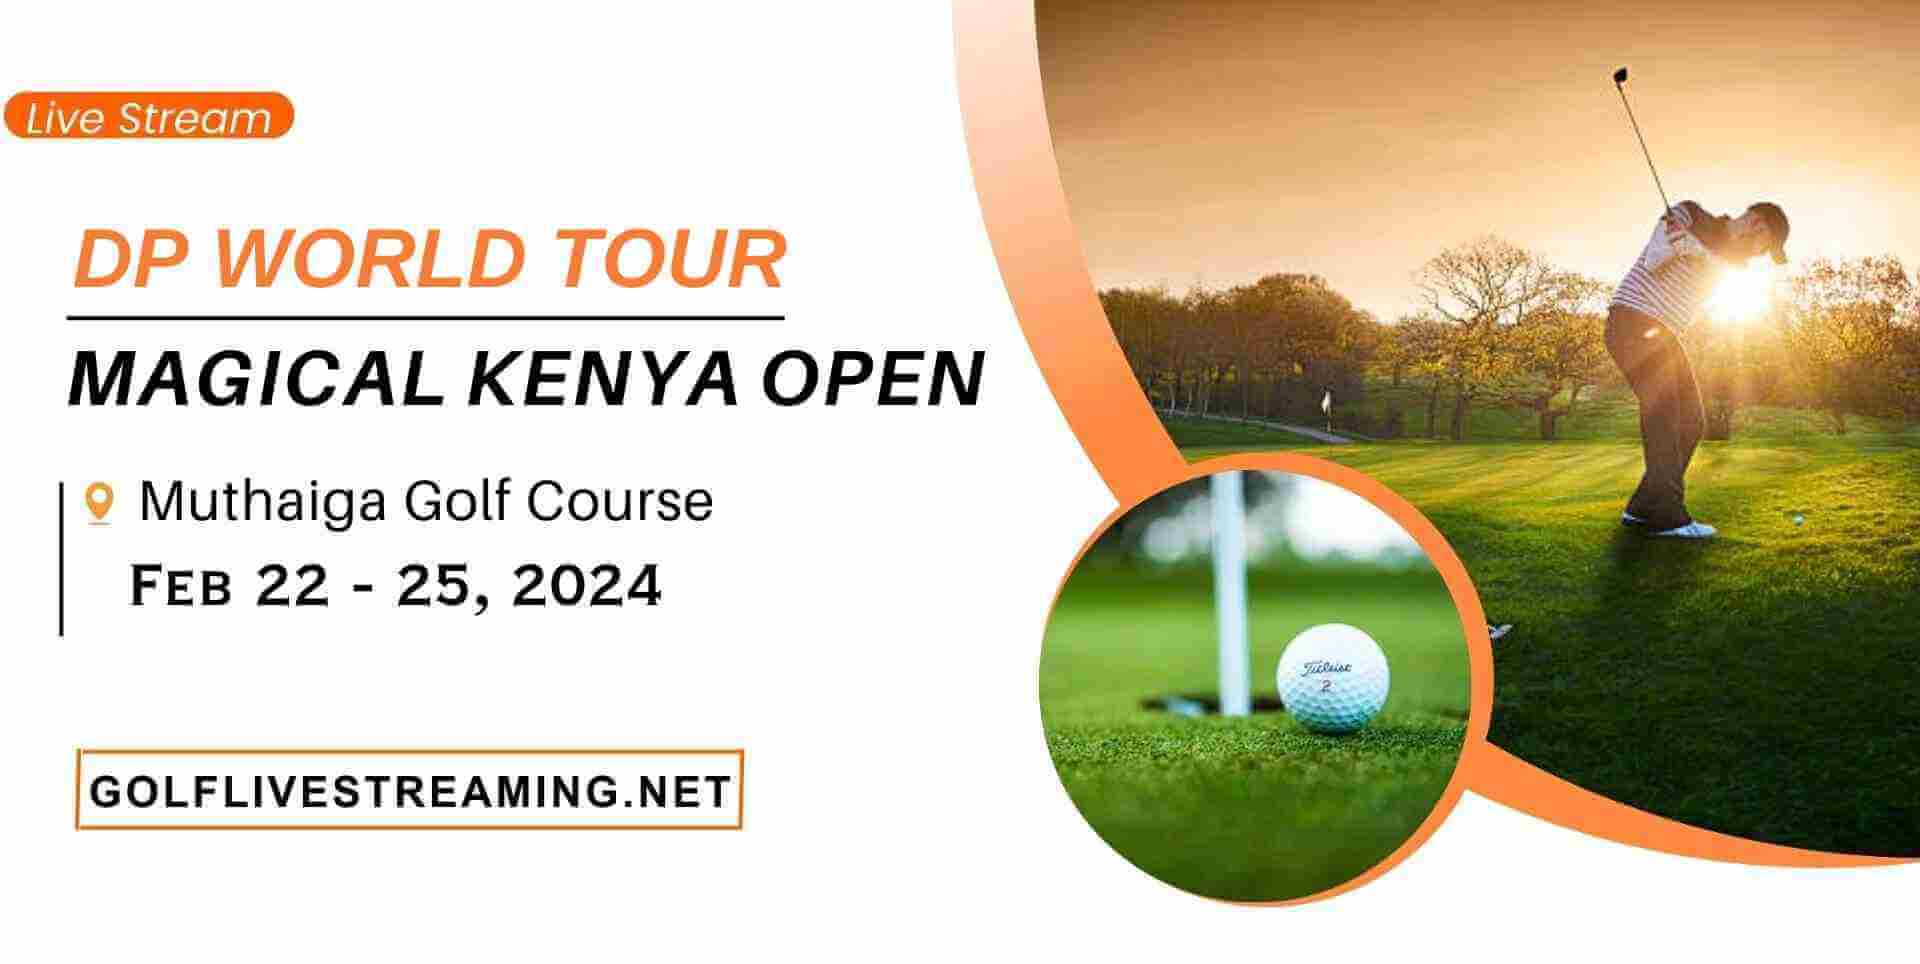 Kenya Open Golf Live Stream 2019